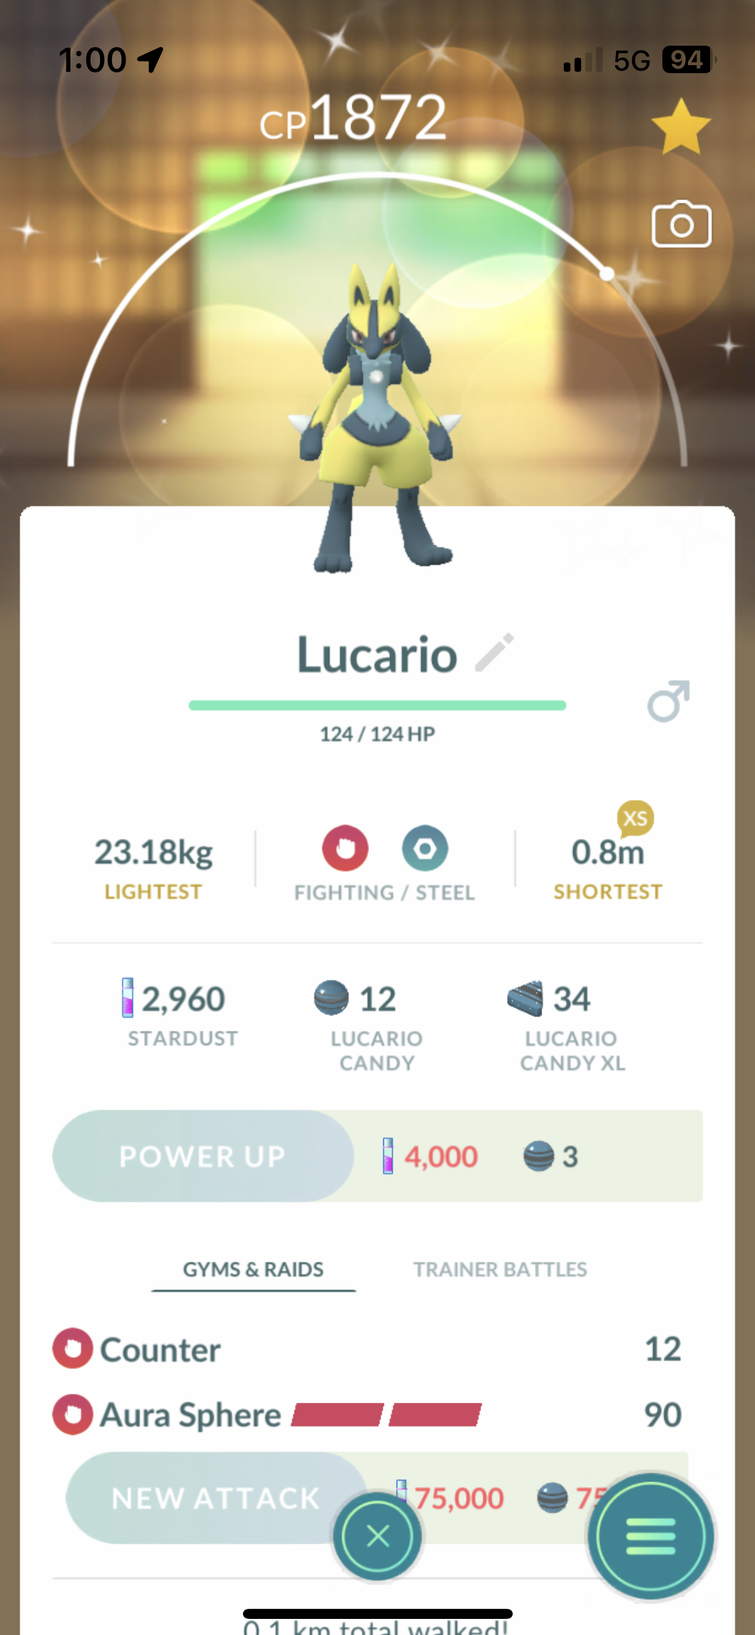 Shiny pokemon edits — the lucario line